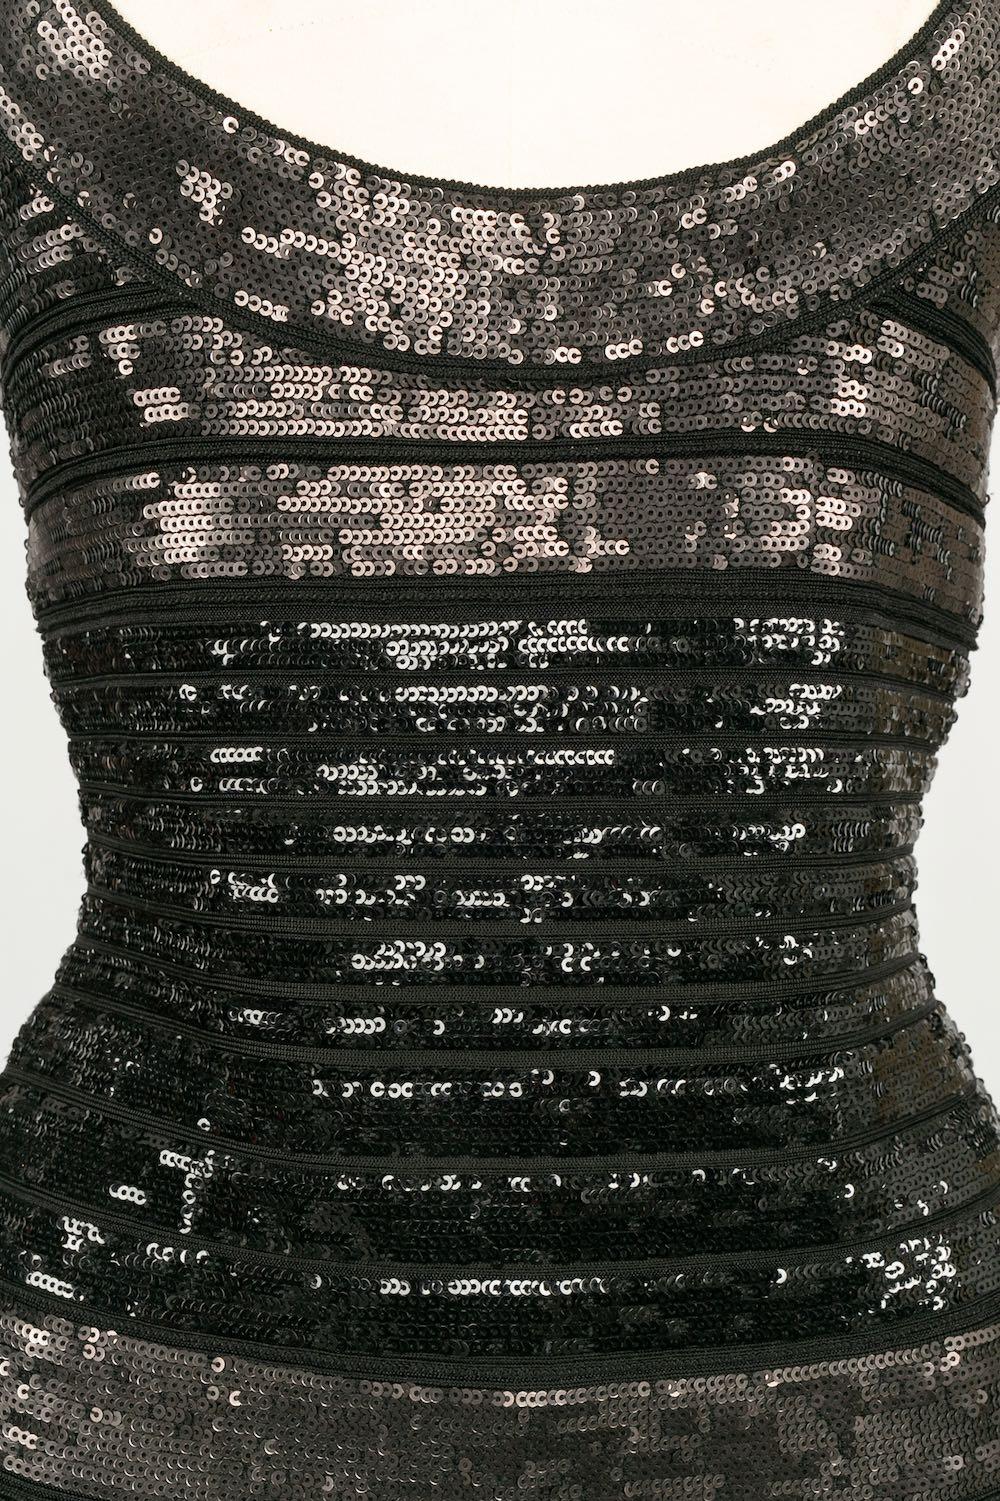 Hervé Léger Black Mesh Dress Embroidered with Sequins For Sale 1